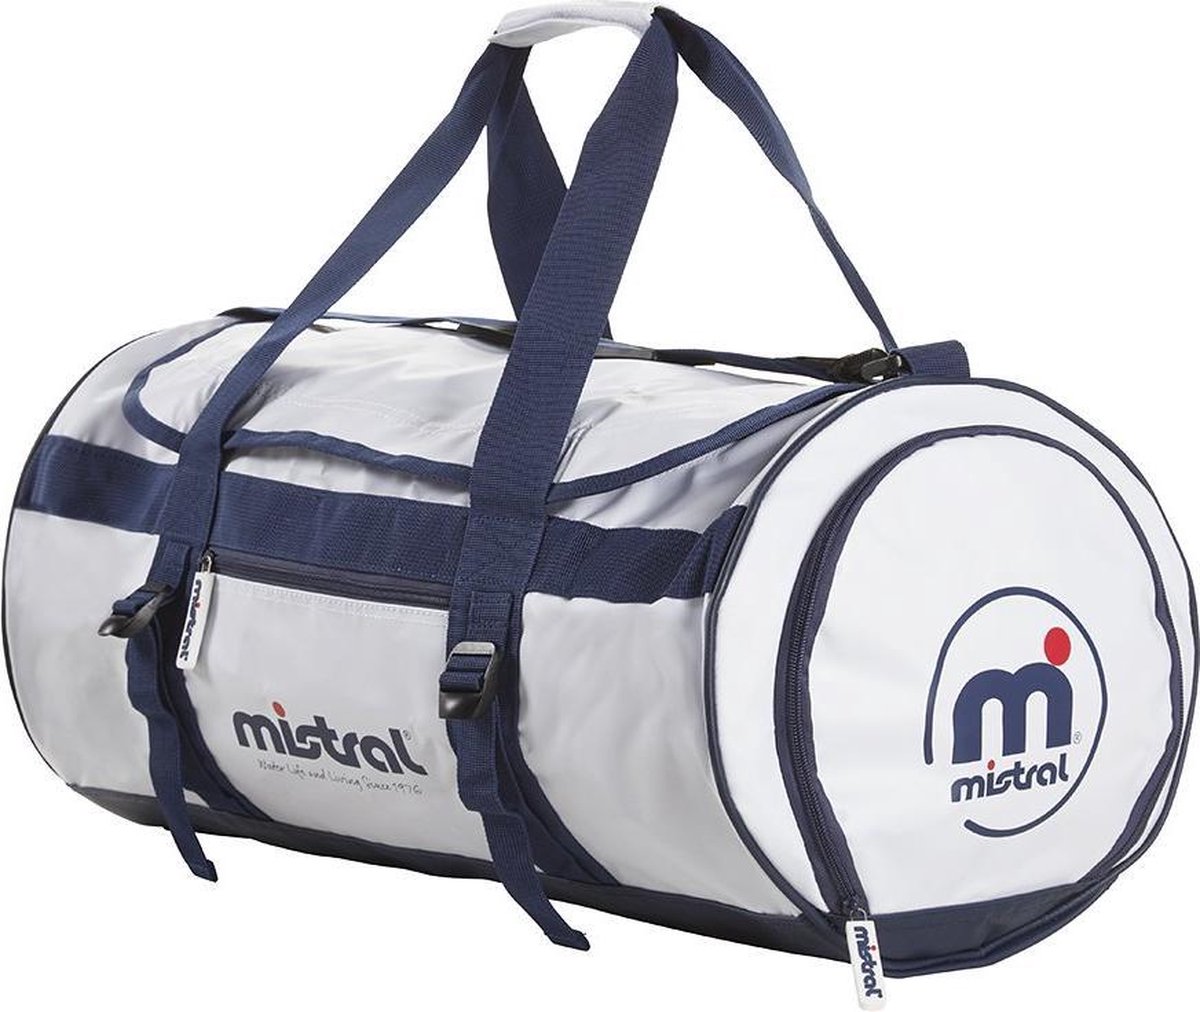 Smaak verpleegster Productiecentrum Mistral Sport Tas - Duffel Bag | bol.com